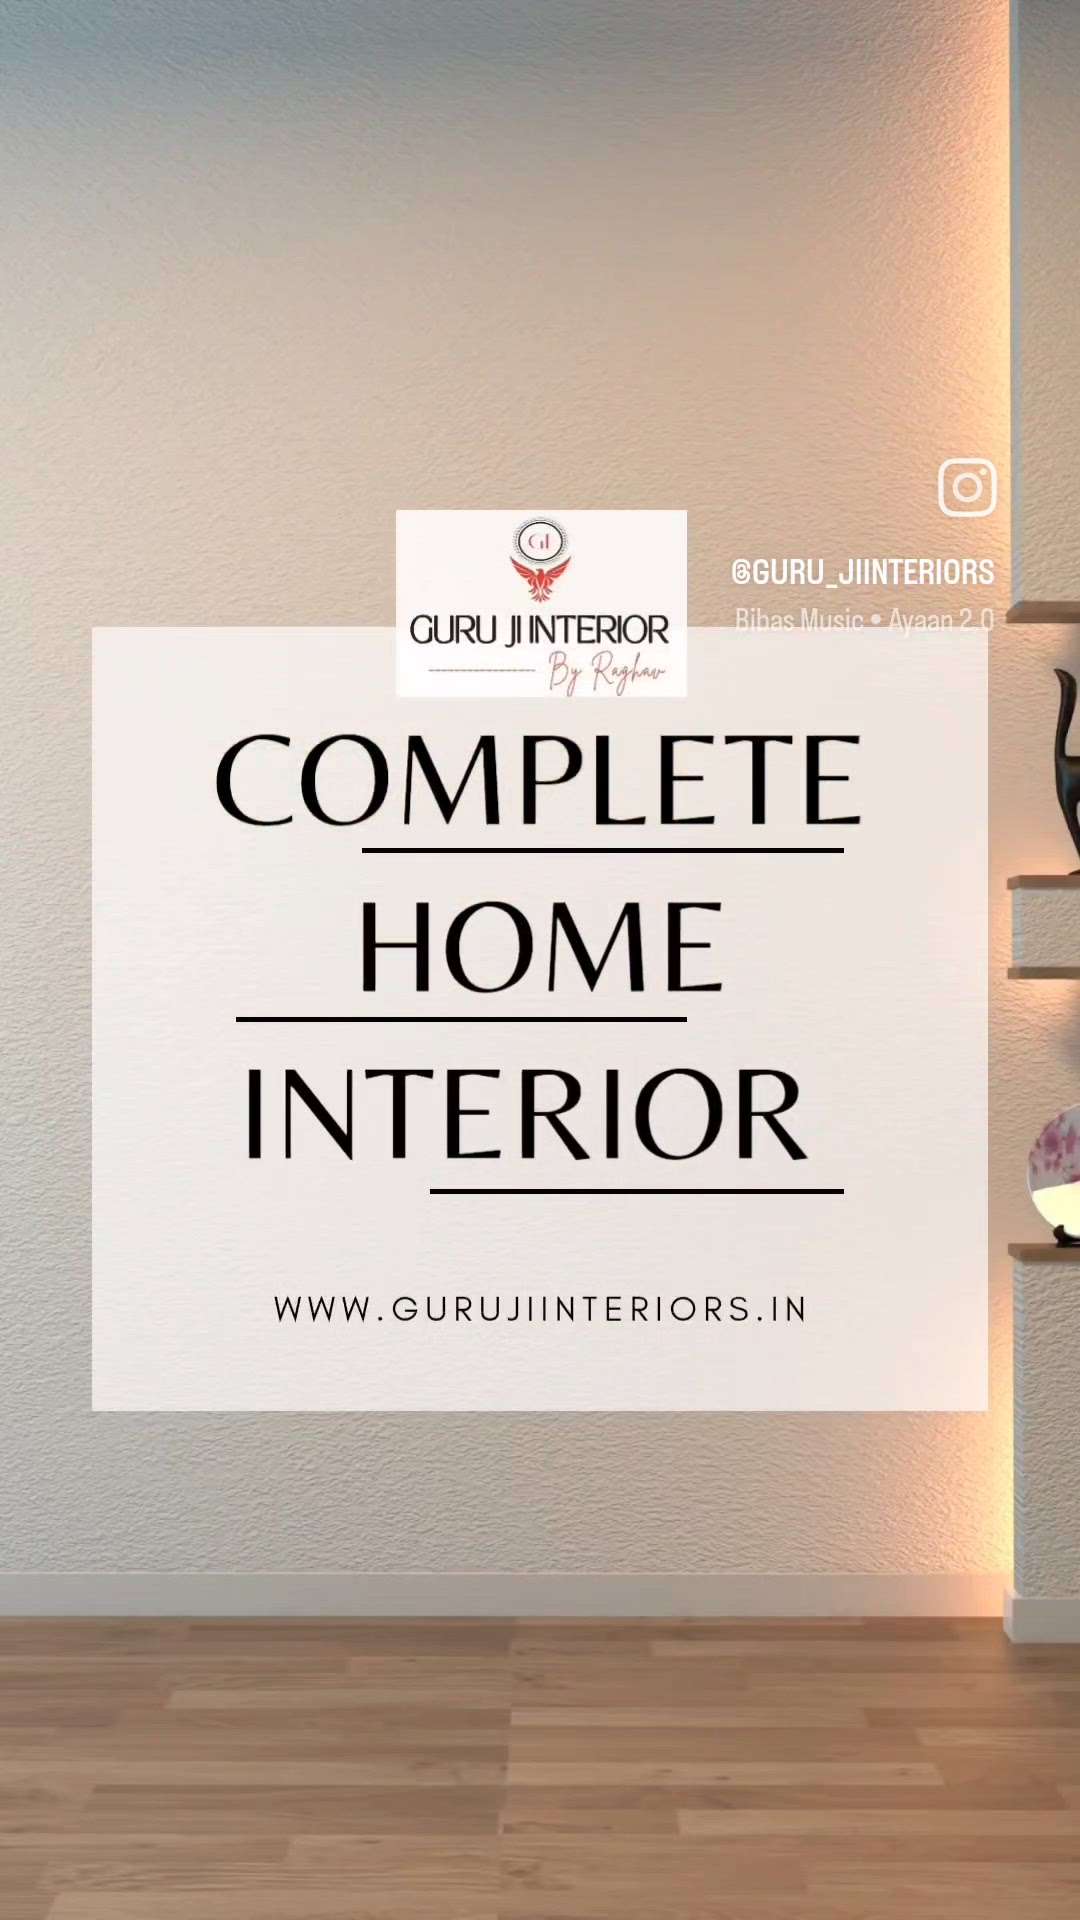 Complete Home Interior 
@ Great Designs for your home 
Home beautiful Interior design that fit your budget 
#gurujiinteriors
.
Guru ji interior
By Raghav
Call - 9870533947 ,7303111335
#gurujiinteriors
#Interiordesign #luxuryhomes
#PerfectInterior #homedecore